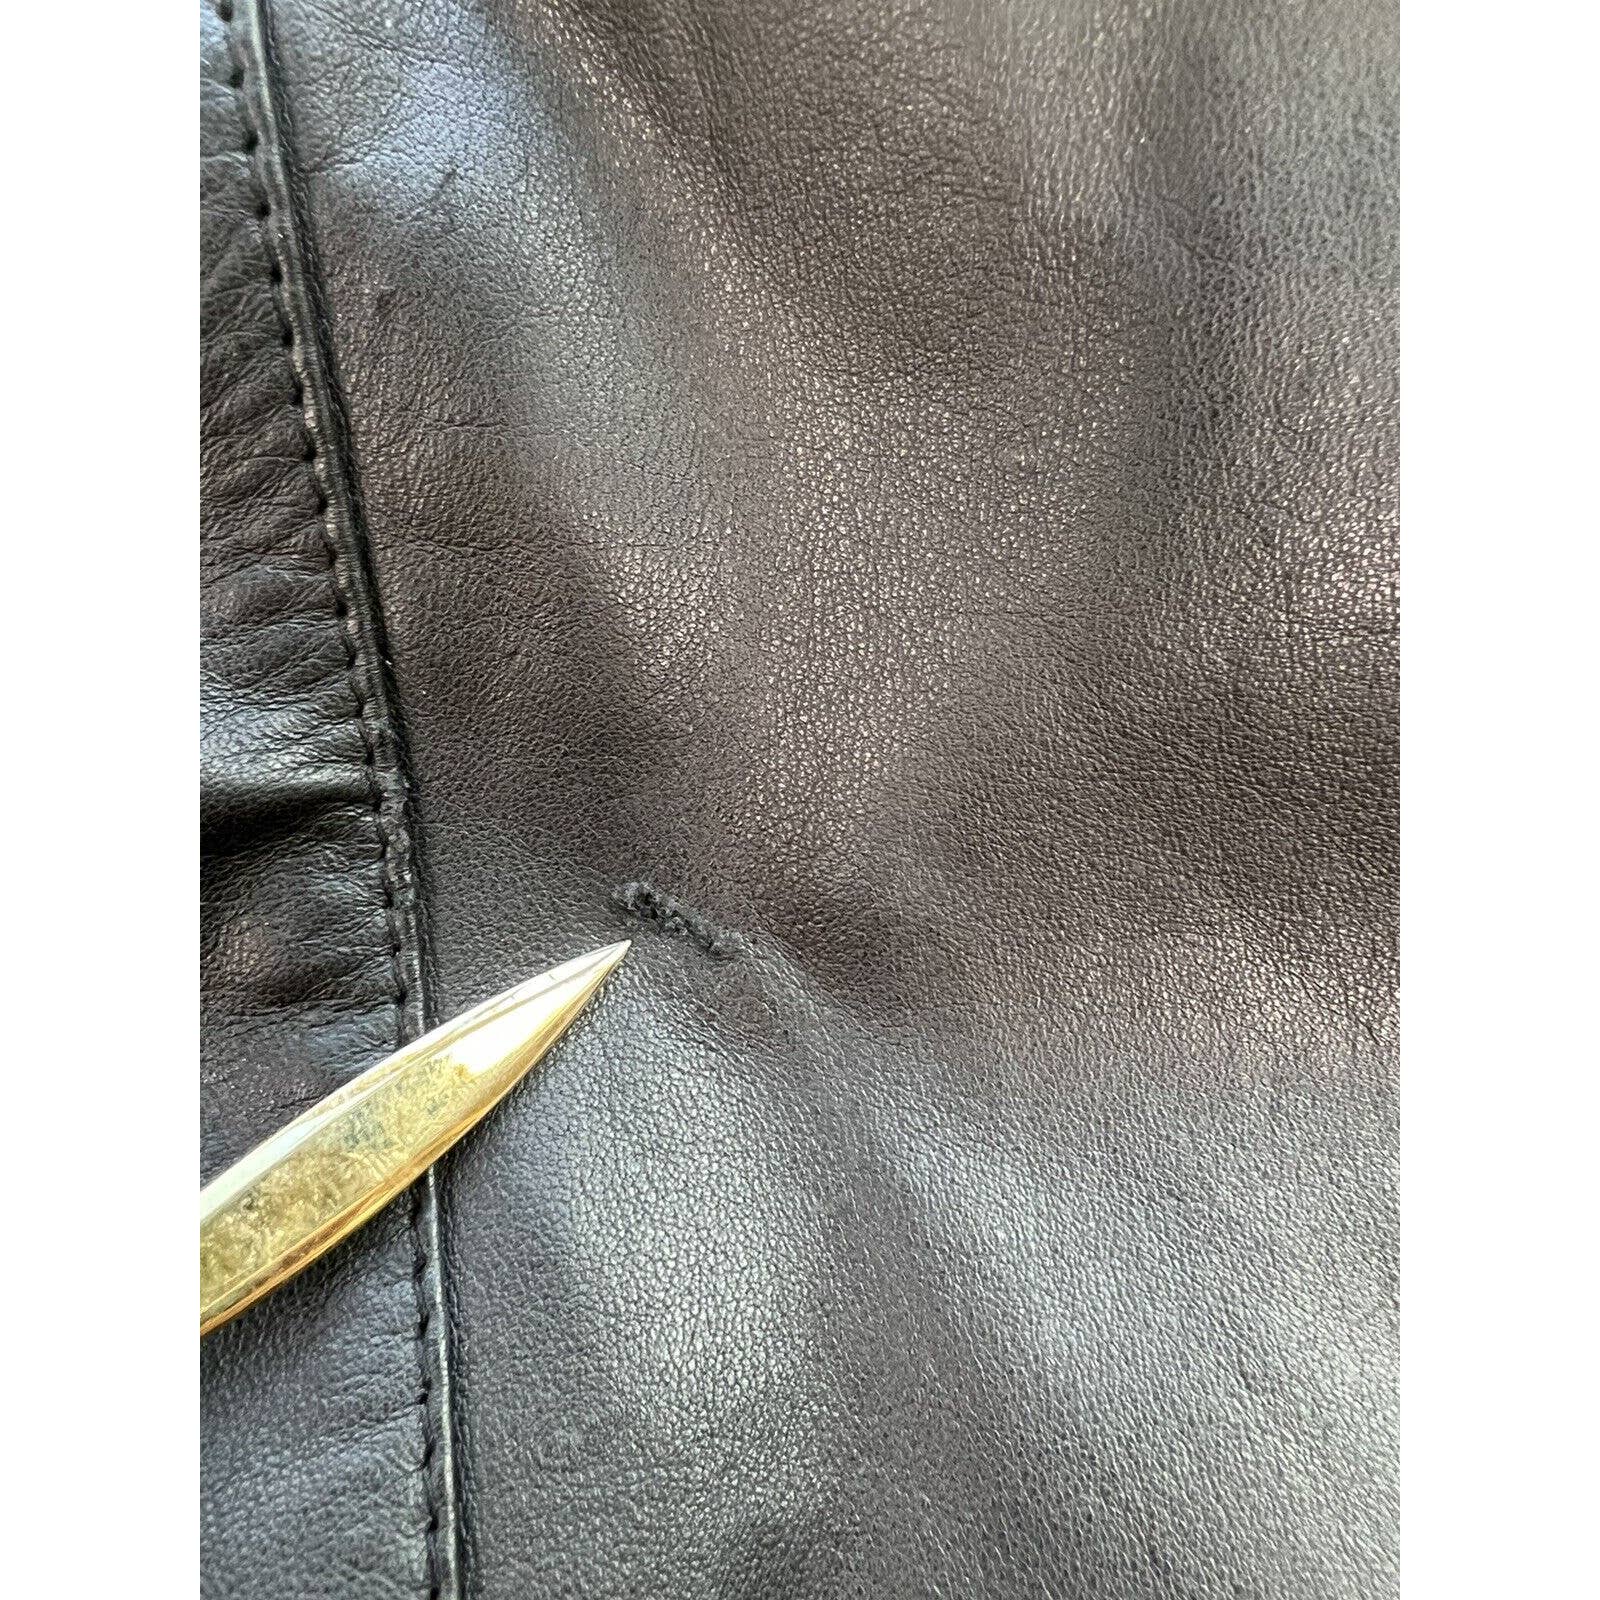 Vintage Genuine Leather Moto Jacket Women’s Small Black Asymmetrical Zipper